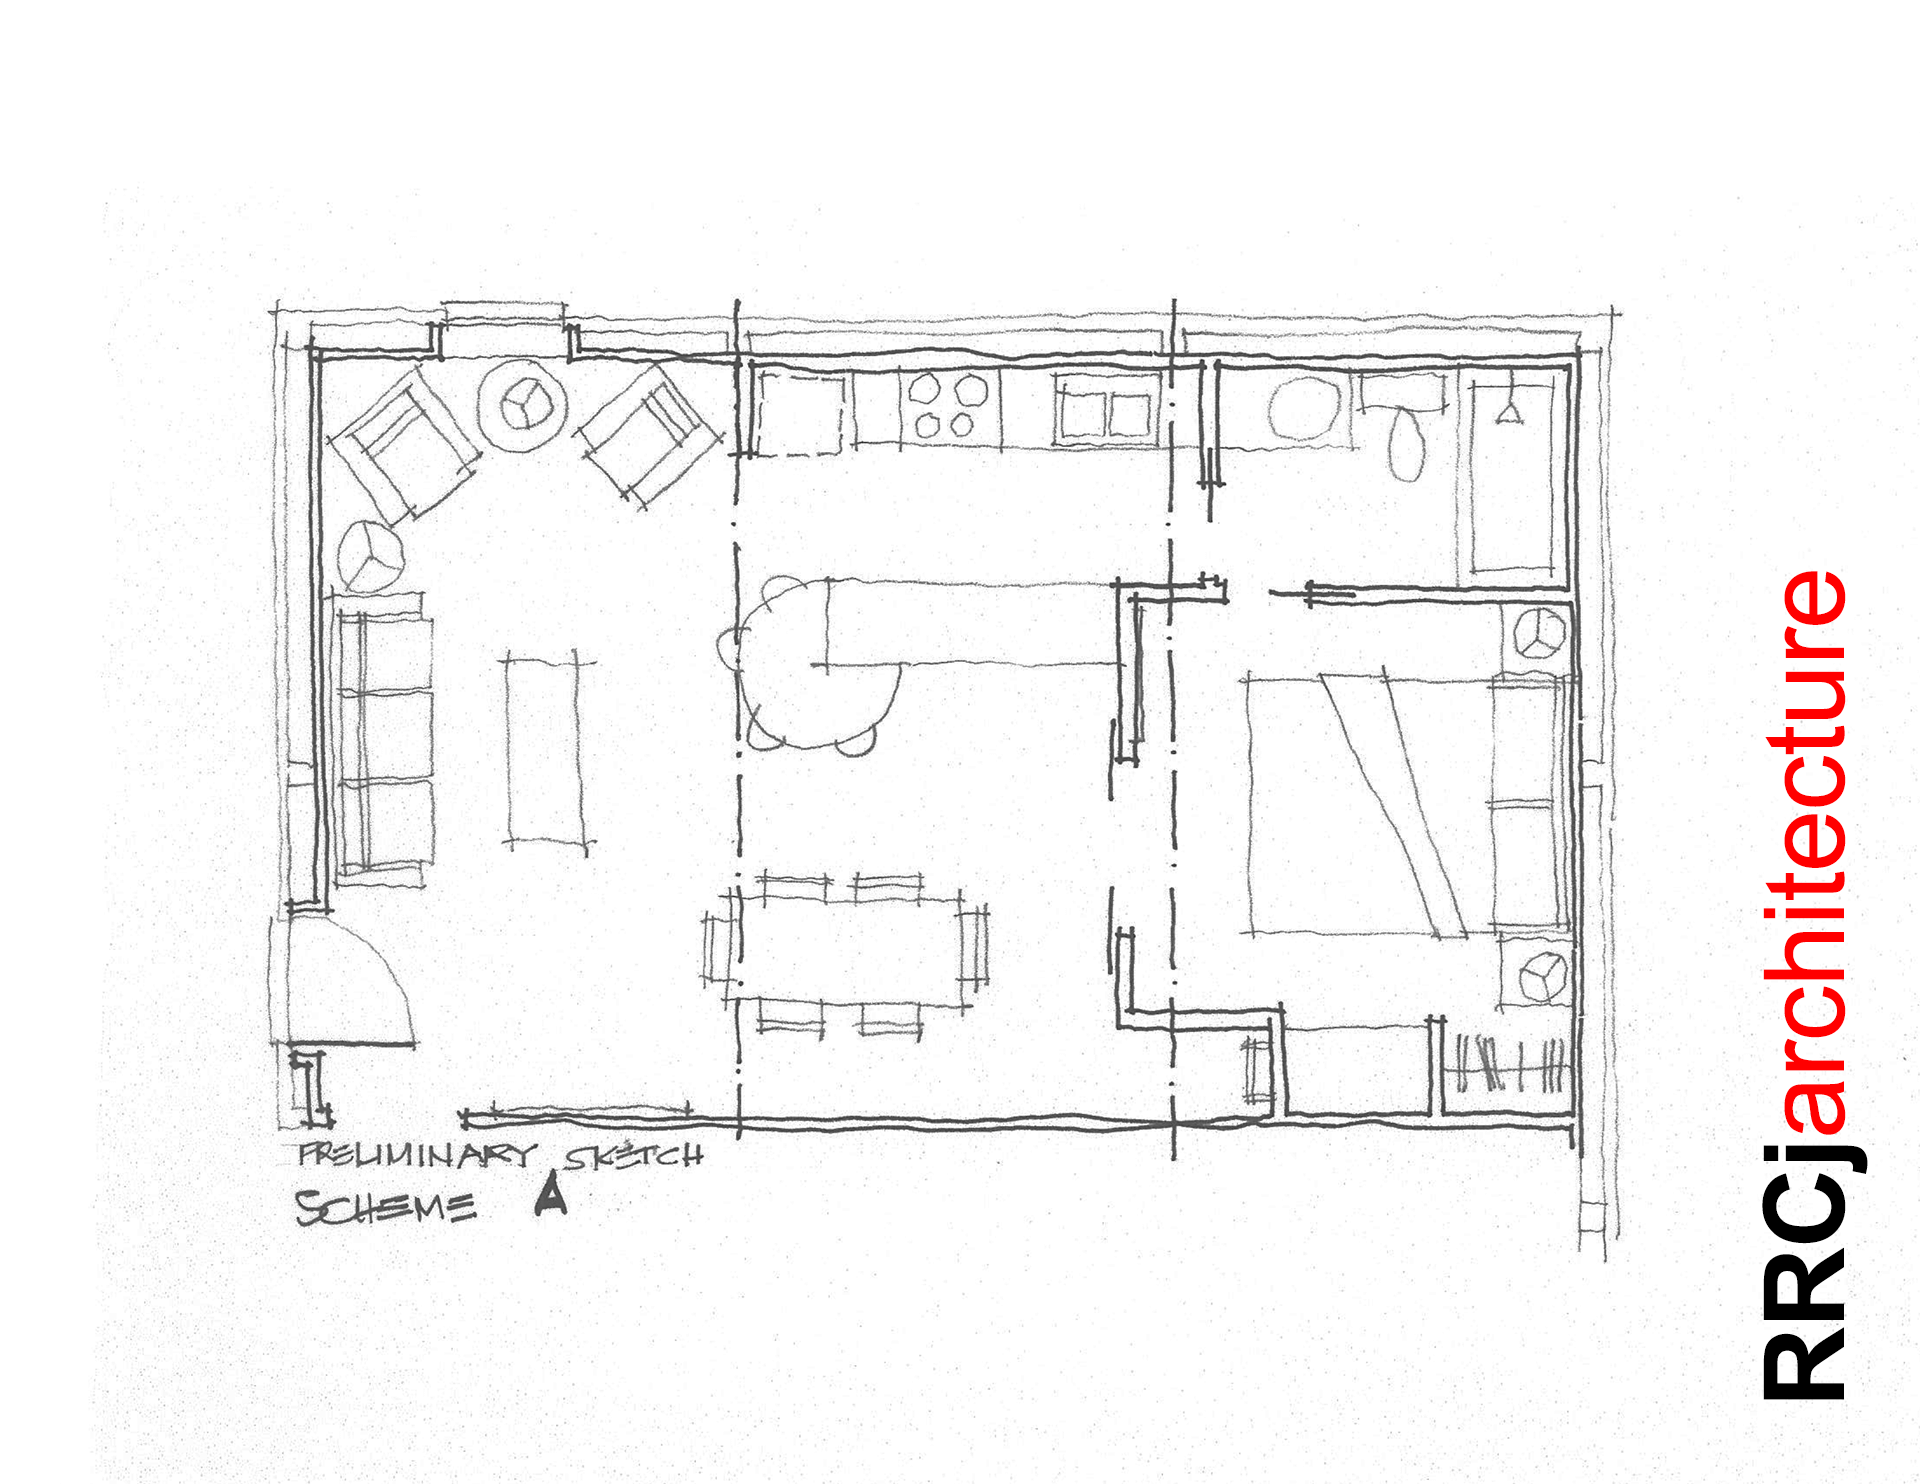 Barndominium Preliminary Sketch Scheme A